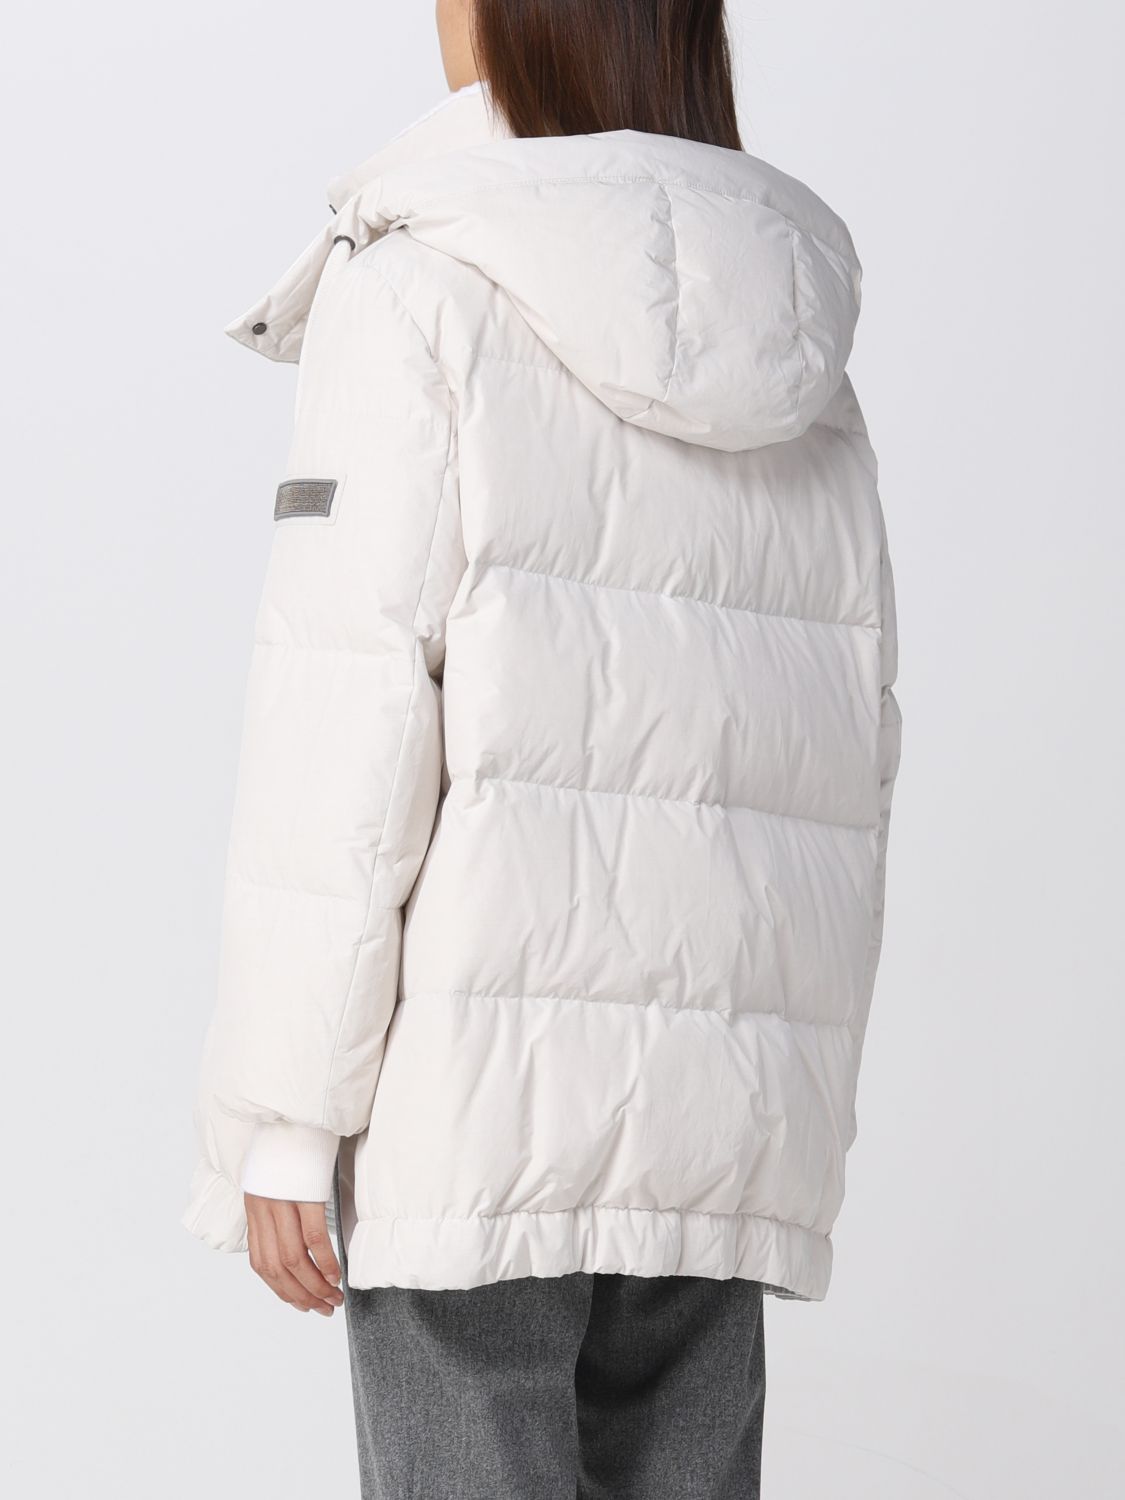 BRUNELLO CUCINELLI: nylon satin jacket with cashmere details - White ...